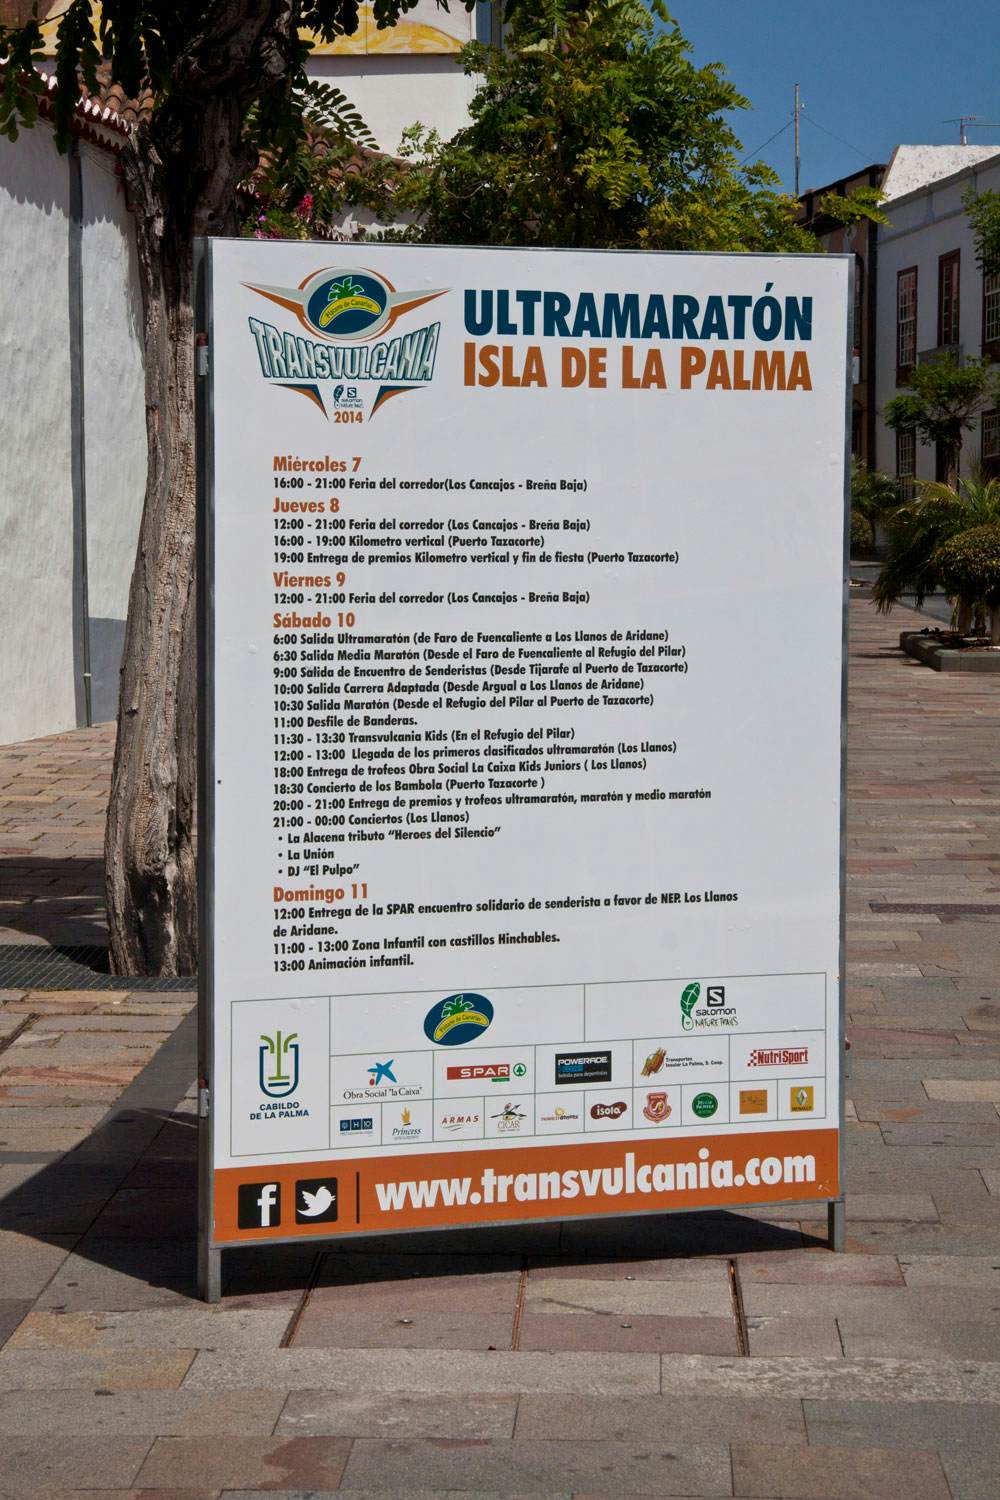 The famous island Ultramarathon Transvulcania 